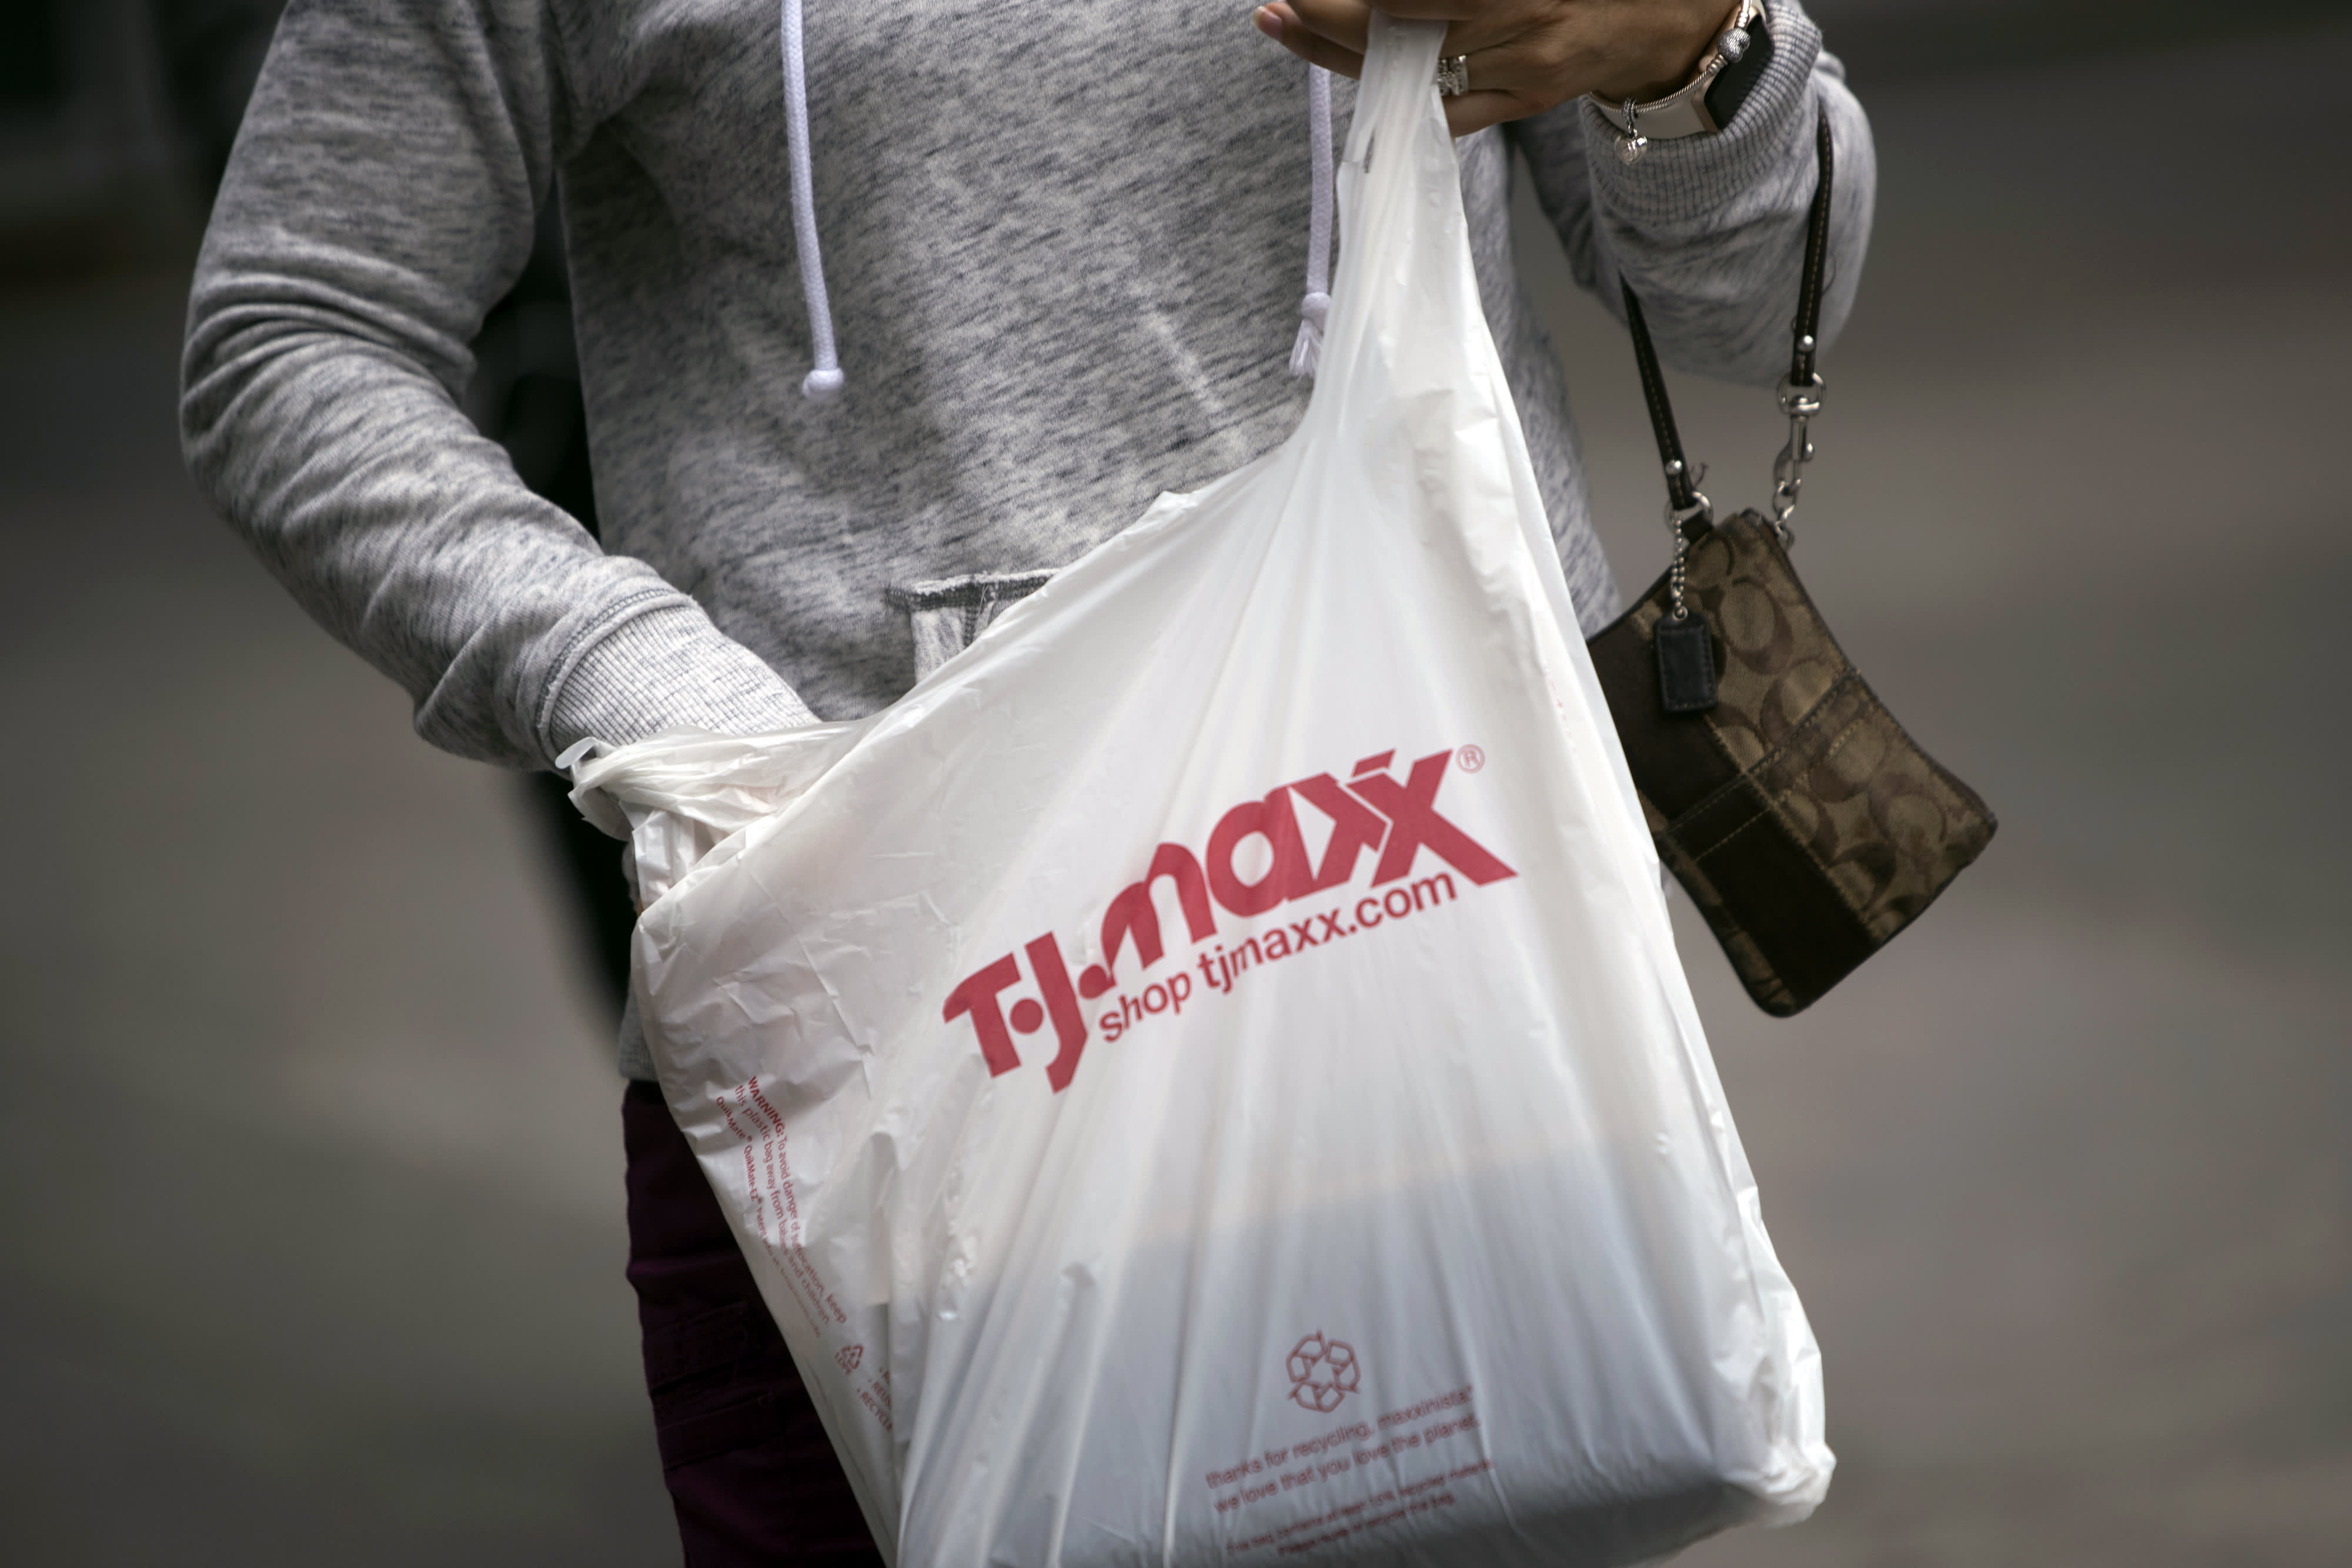 Reusable Bags as Low as 99¢ Shipped at TJMaxx